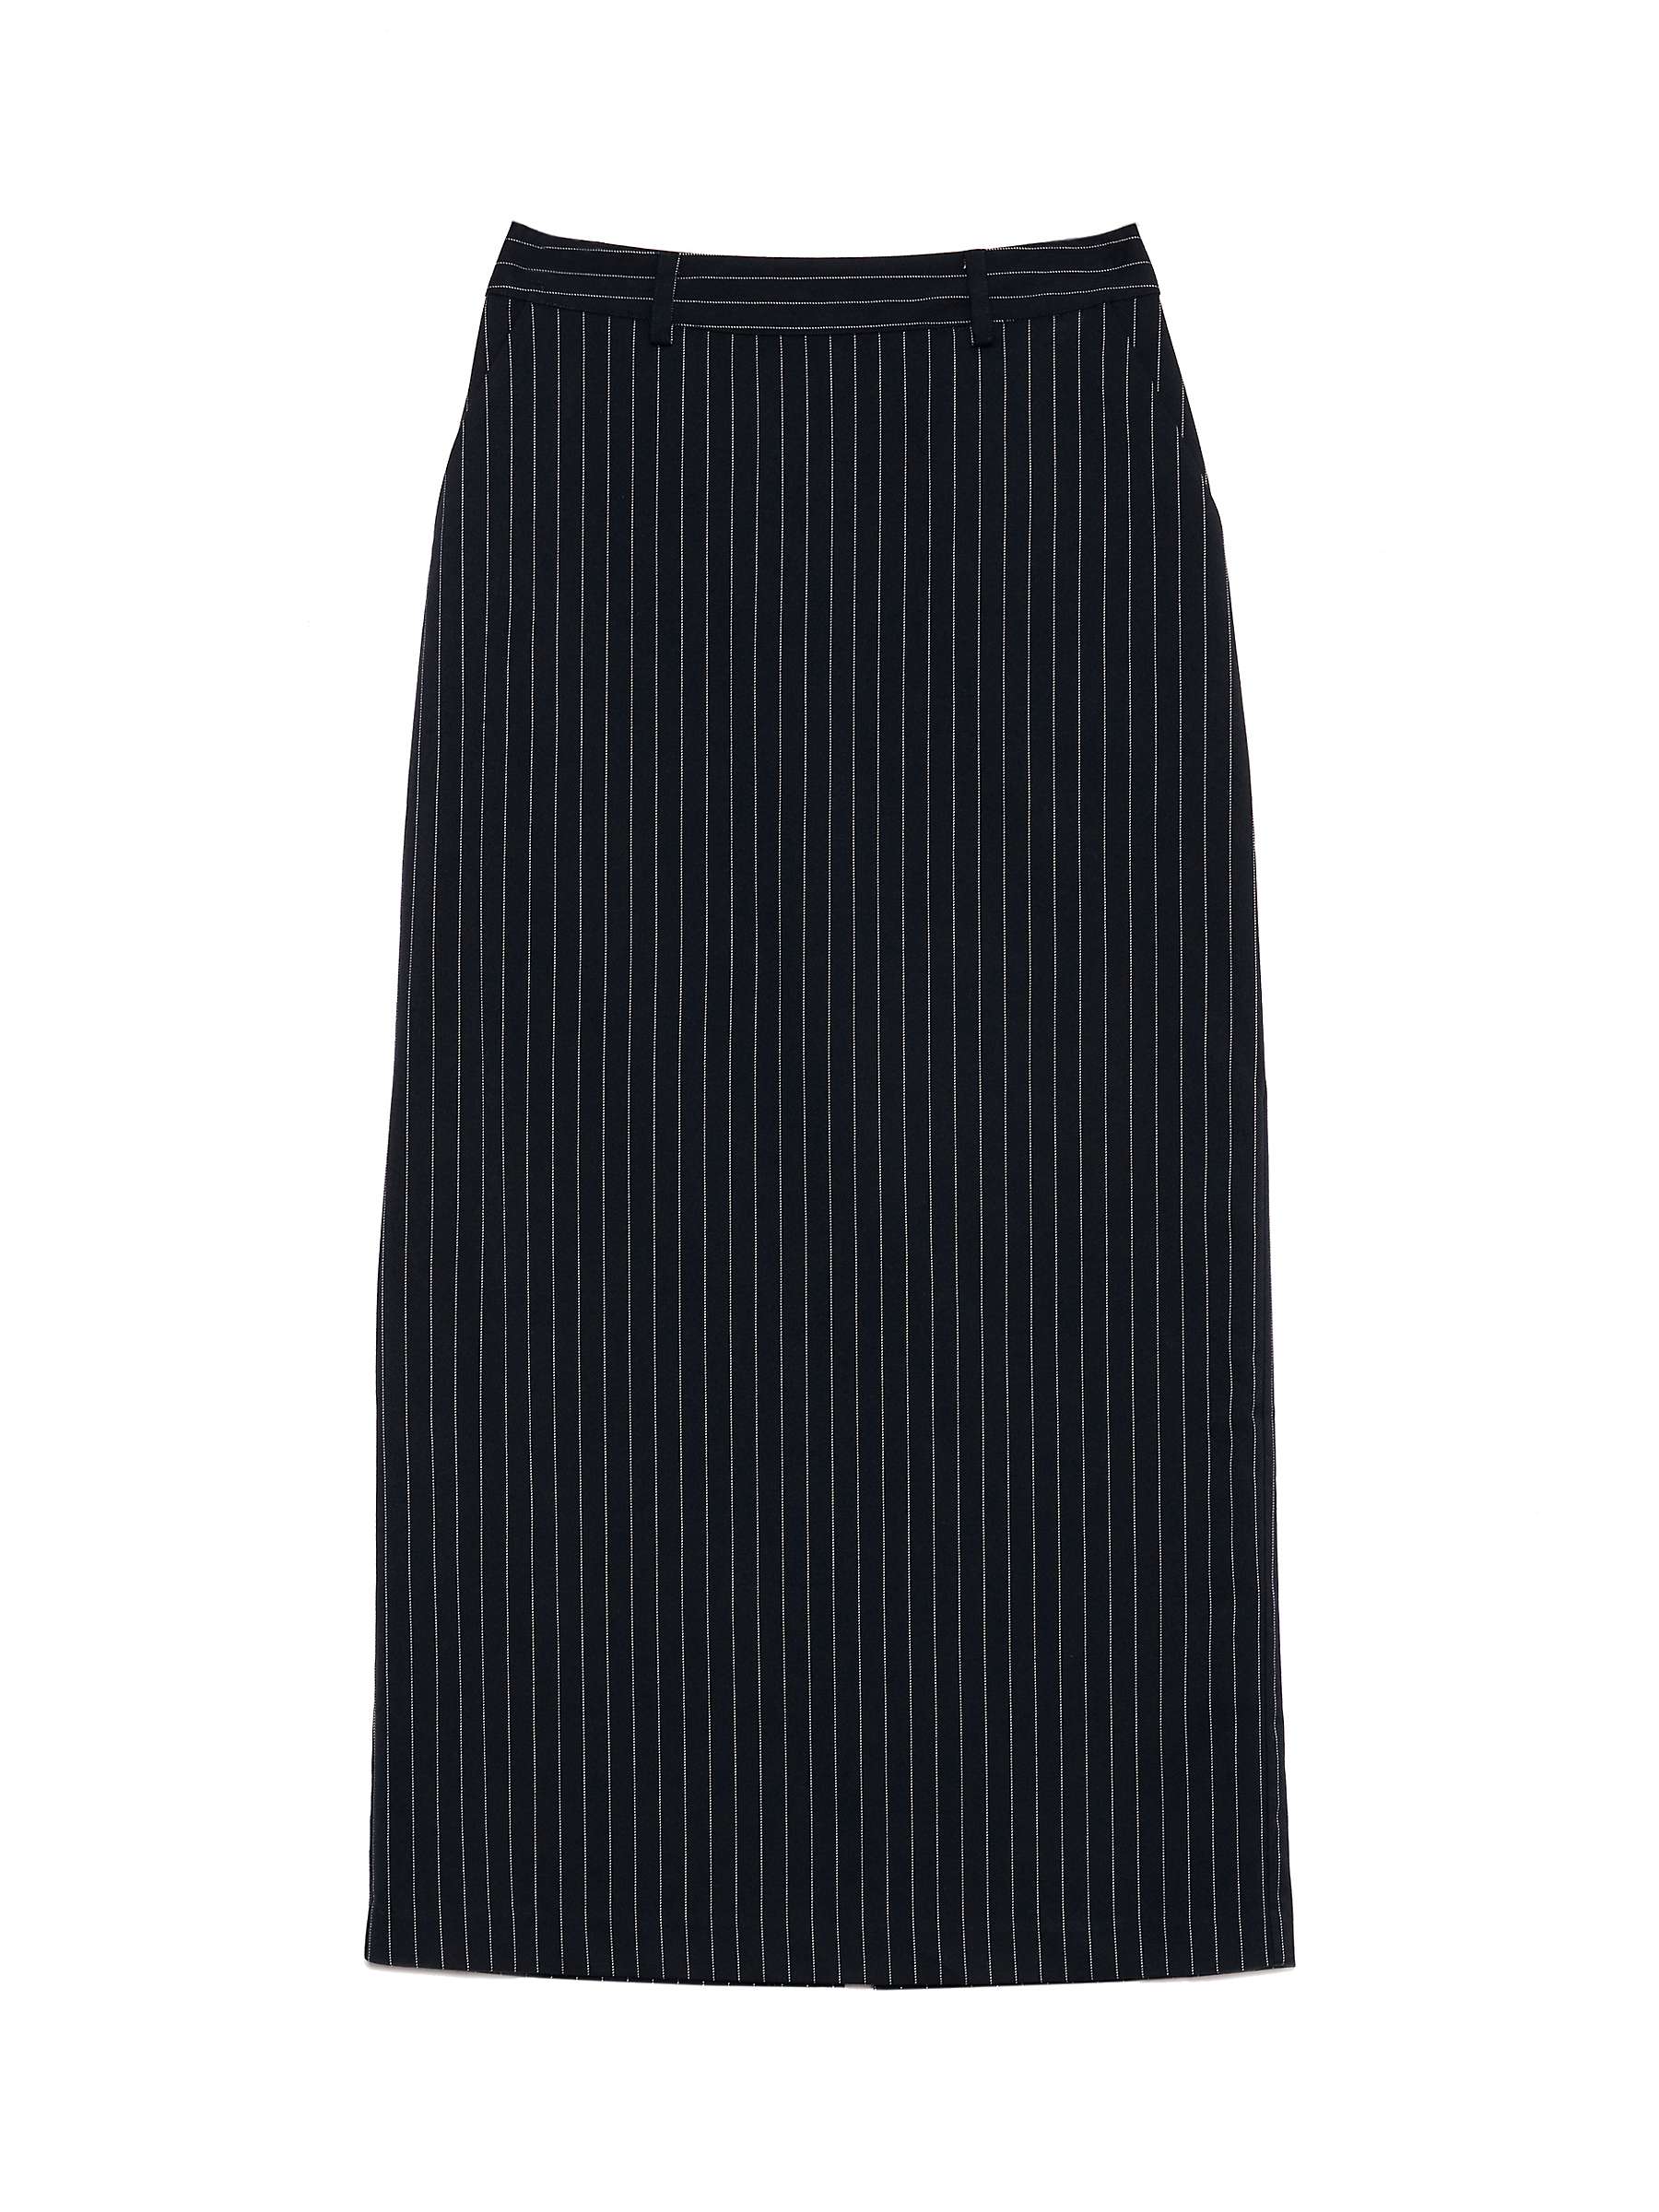 Buy Albaray Tailored Pinstripe Maxi Skirt, Navy Online at johnlewis.com